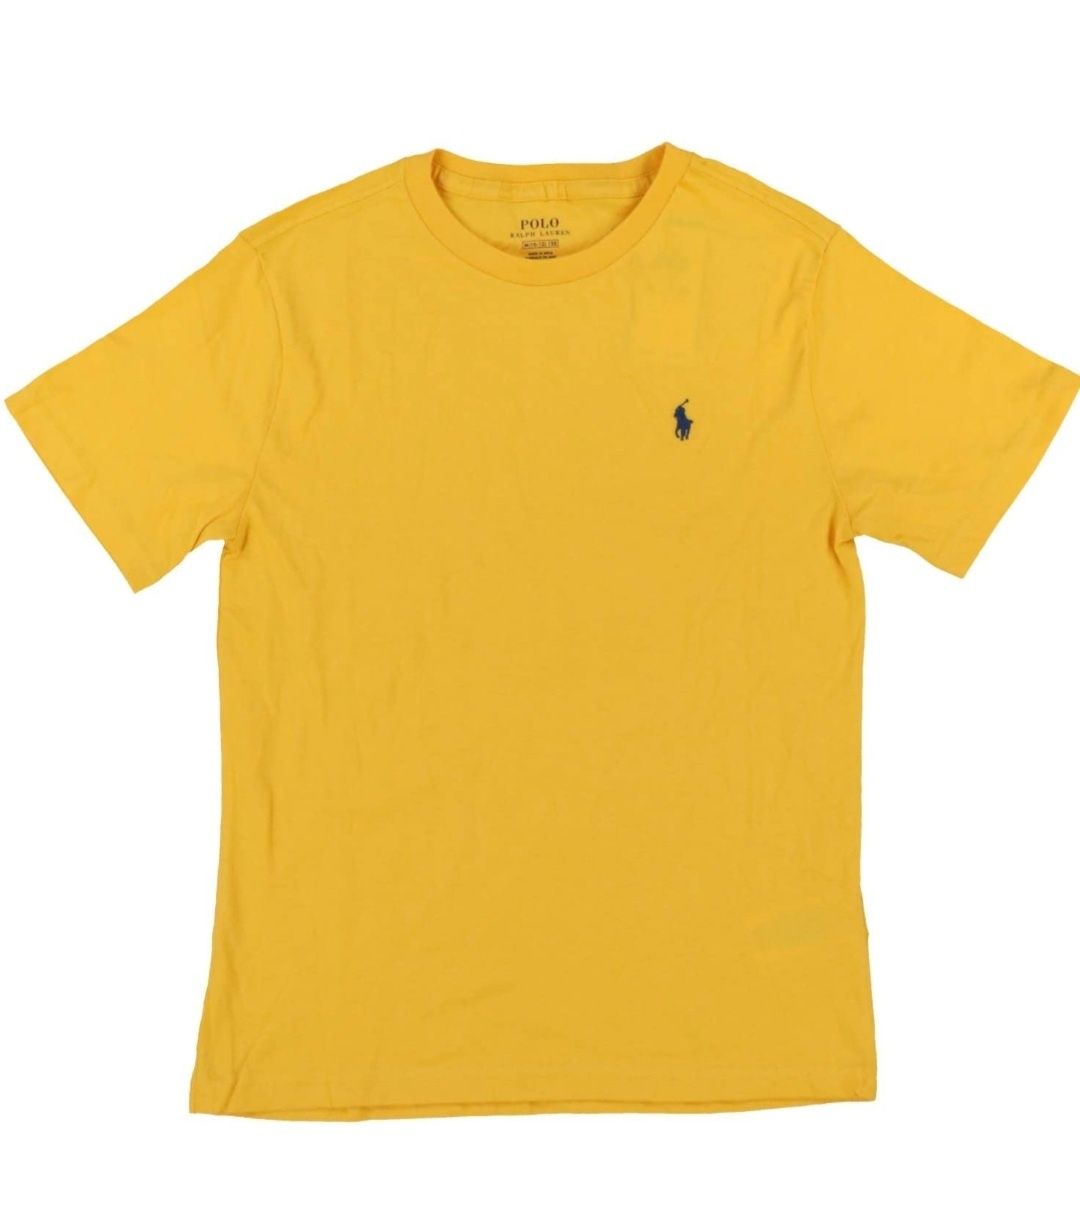 T shirt rapaz: POLO RALPH LAUREN, tamanho 10-12 anos